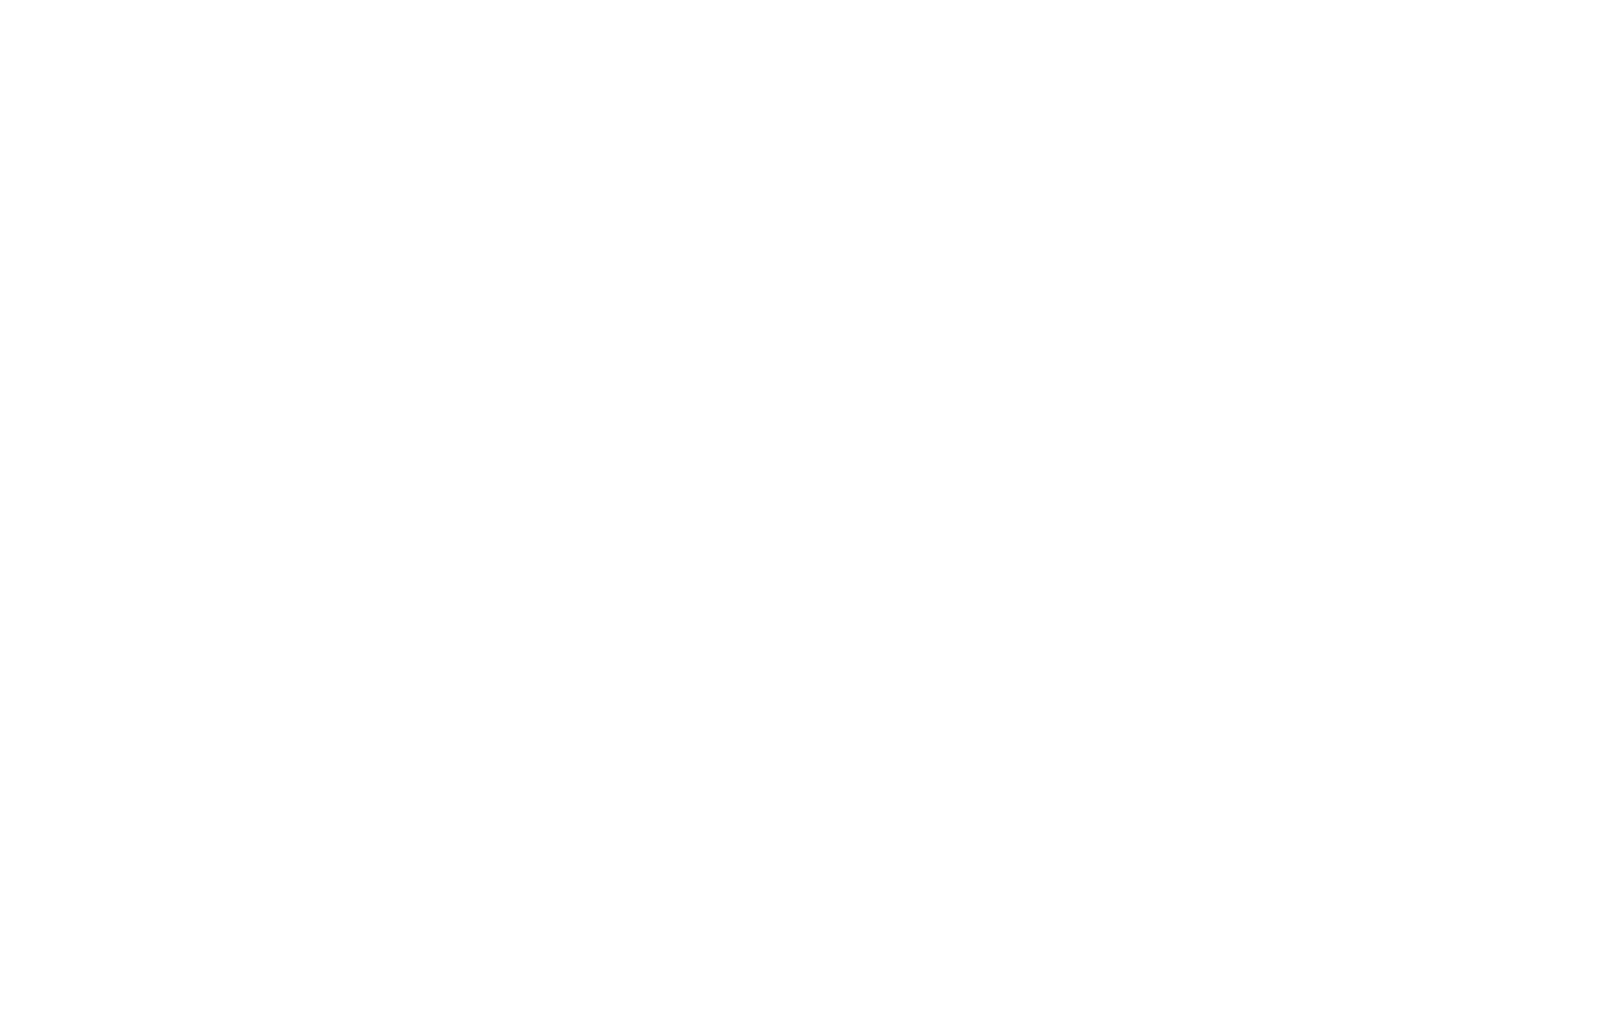 Starbox Group logo large for dark backgrounds (transparent PNG)